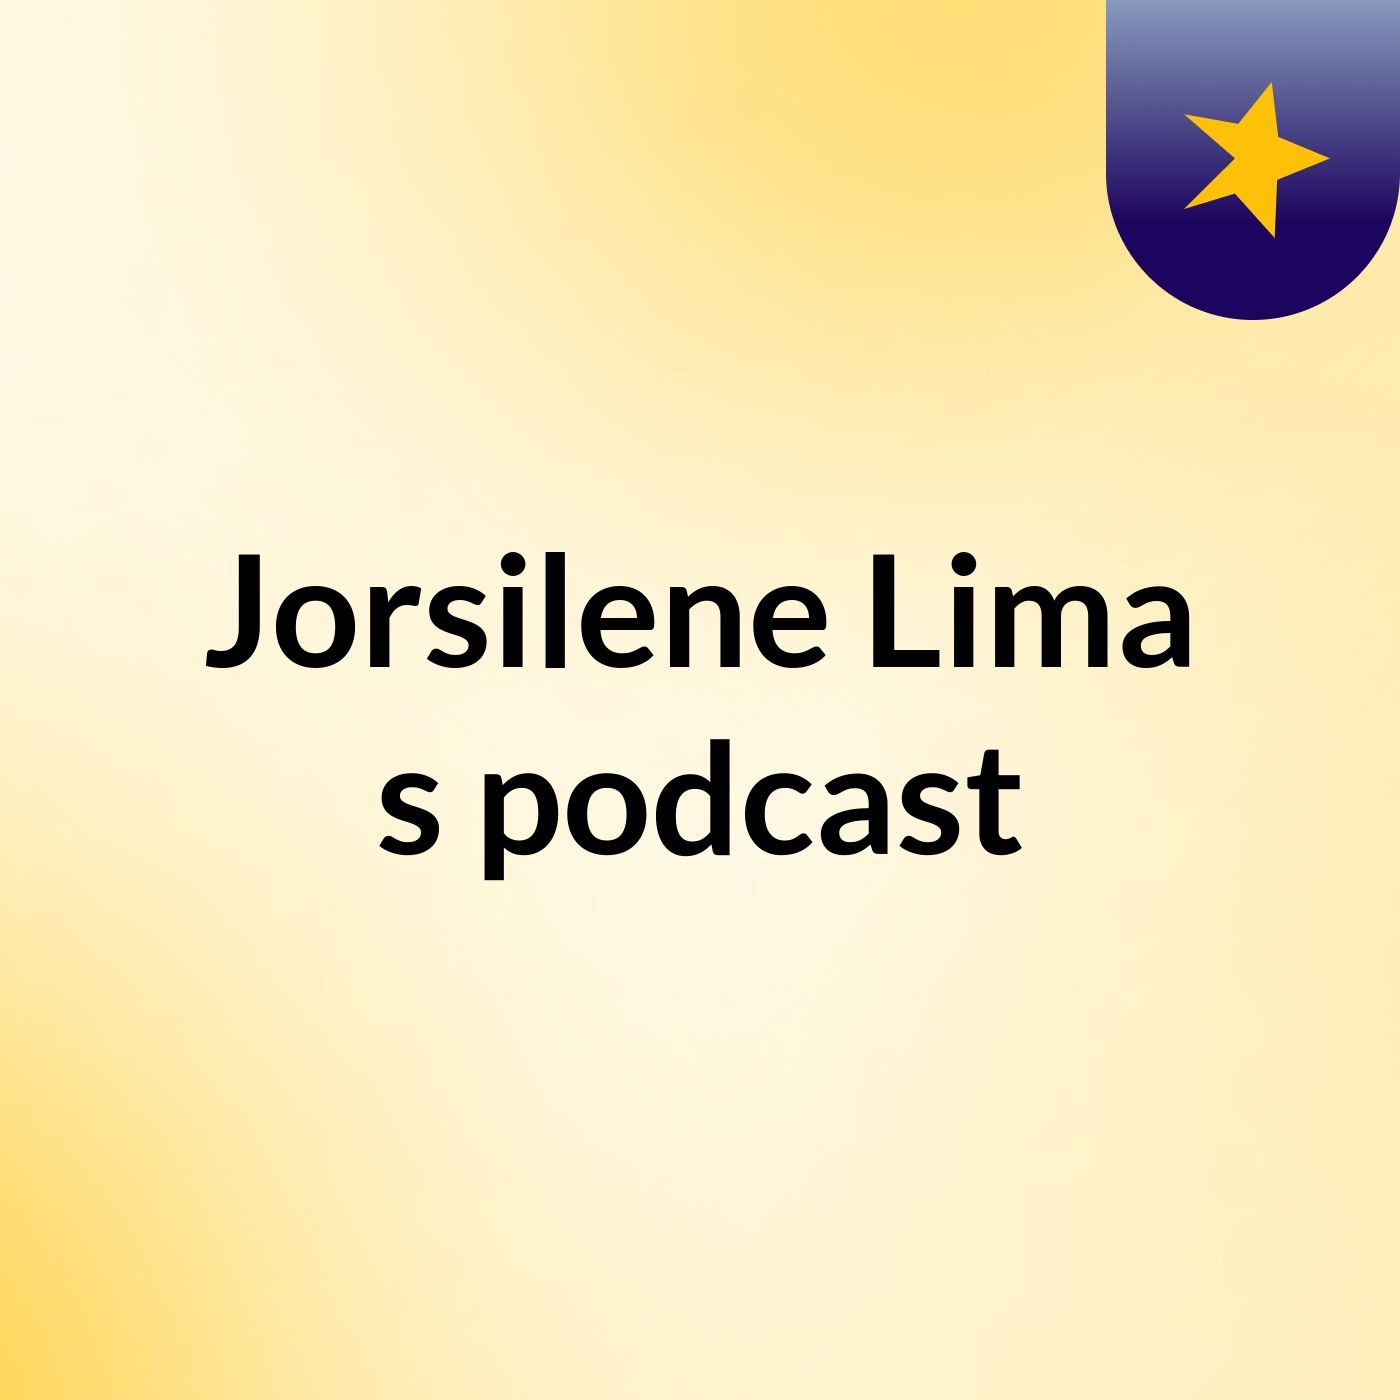 Jorsilene Lima's podcast